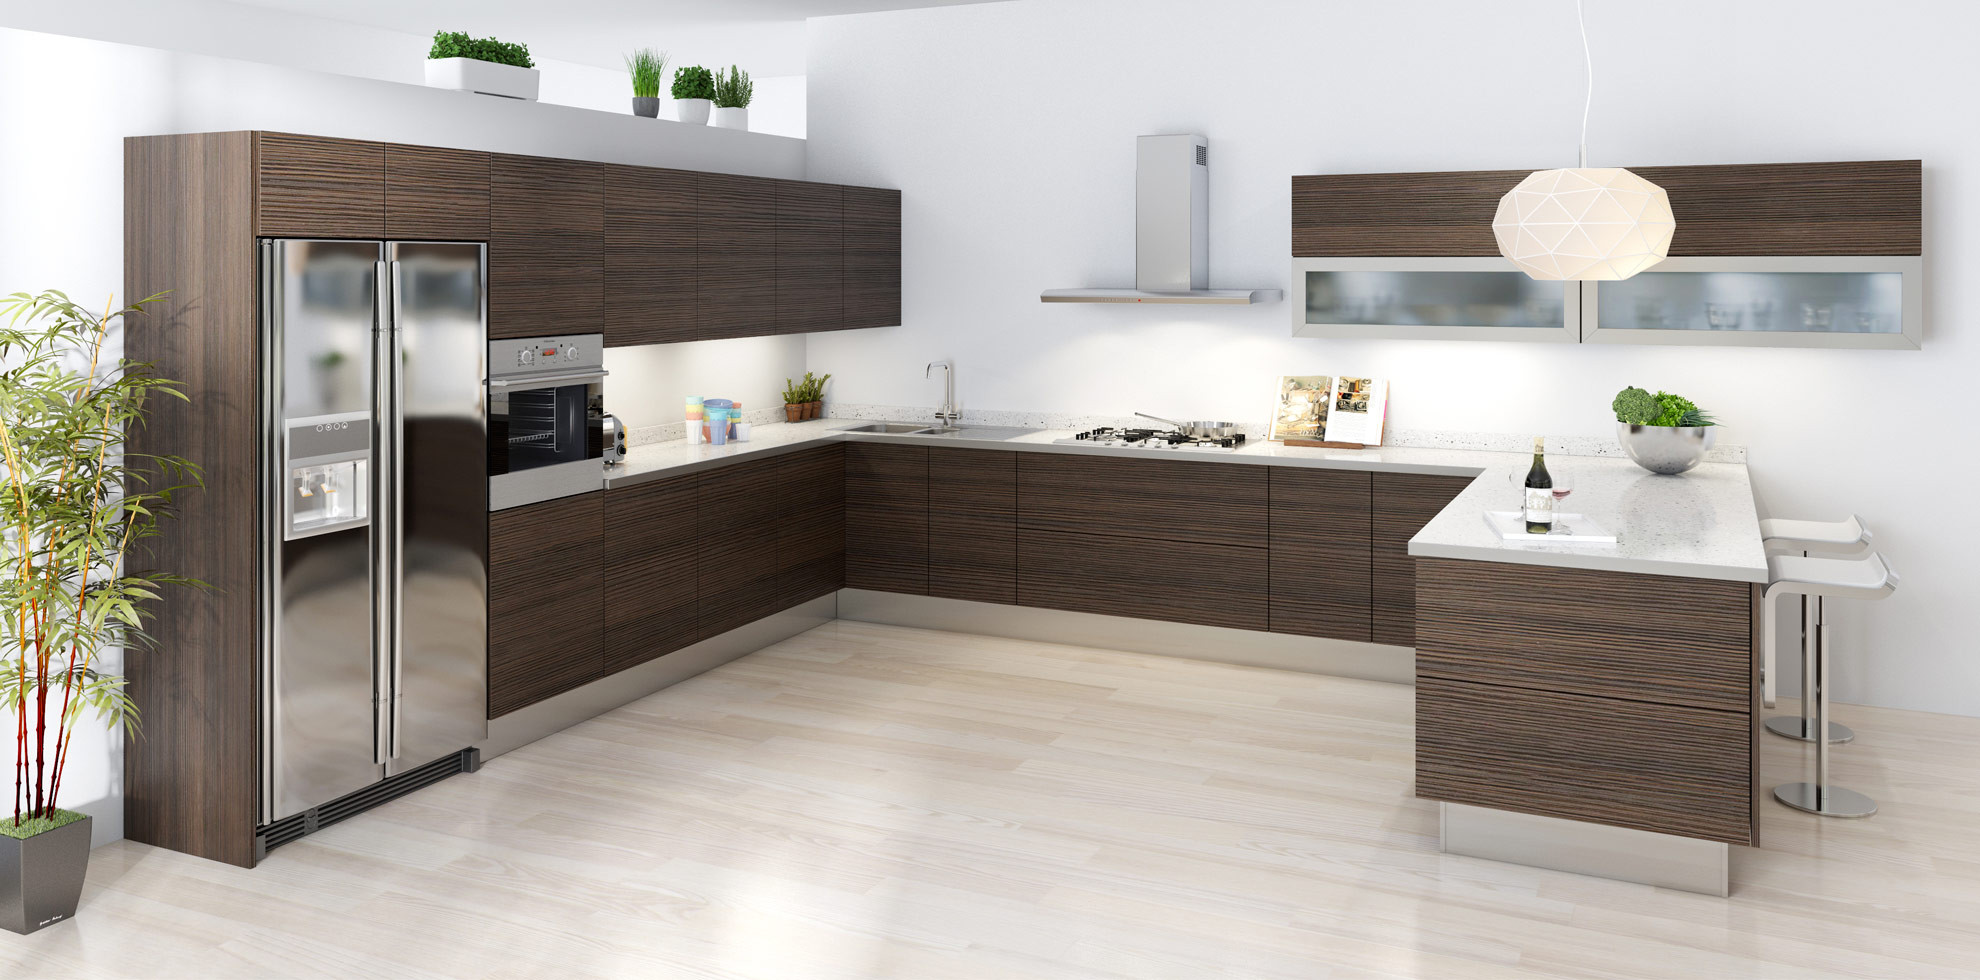 Modern Bedroom Cupboards Designs
 PRODUCT “Amacfi” Modern RTA Kitchen Cabinets online